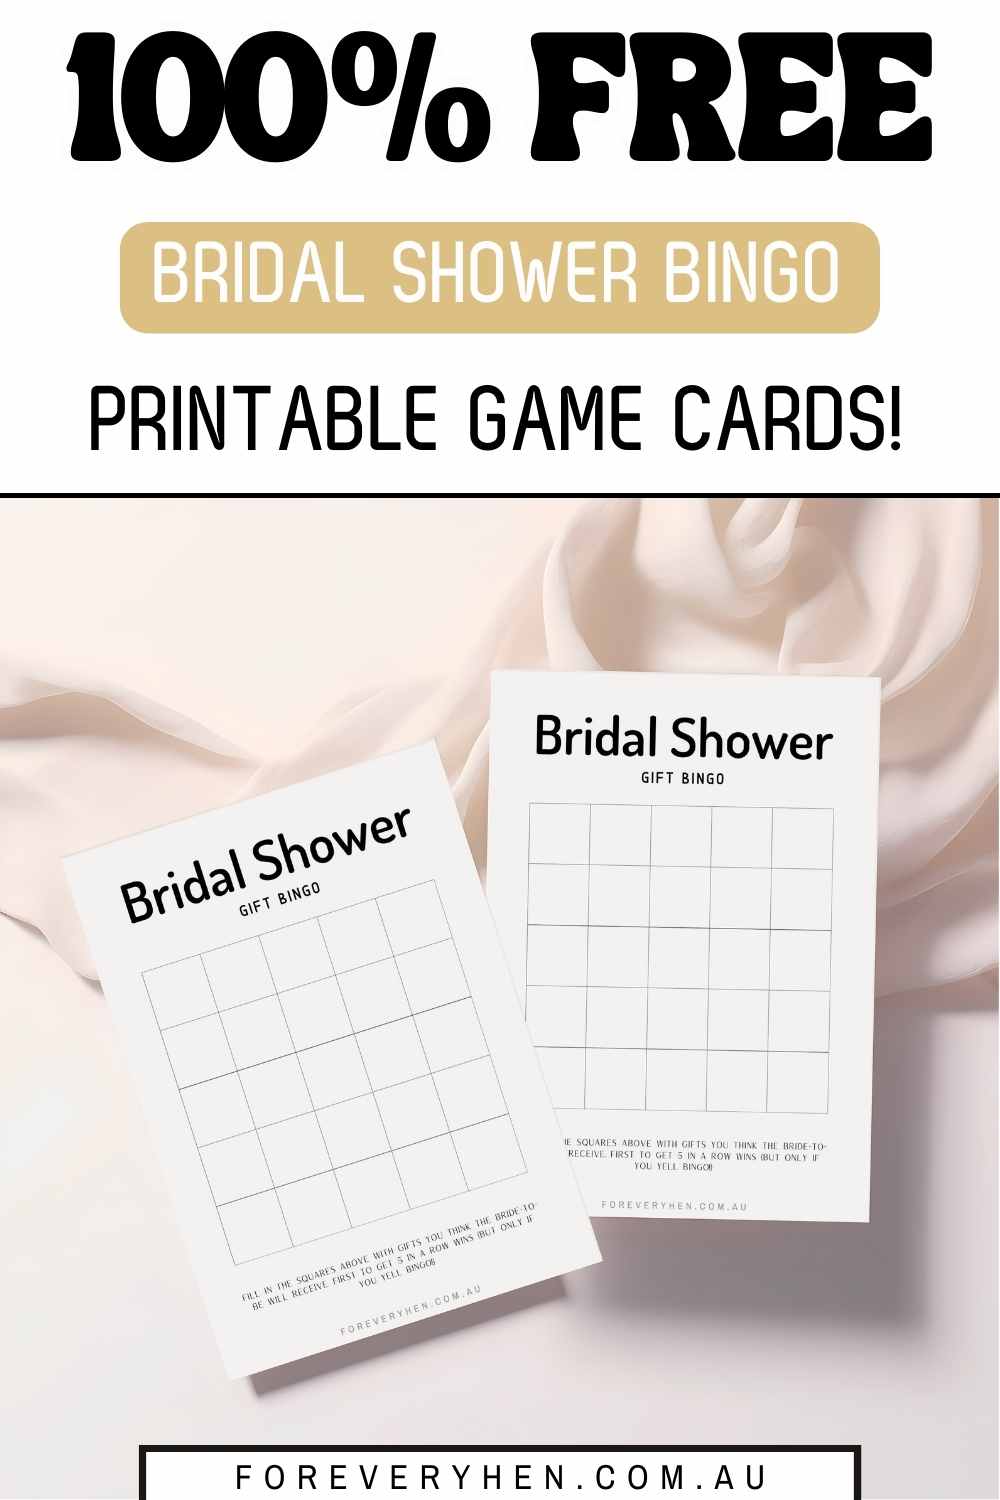 100% Free bridal shower bingo printable game cards